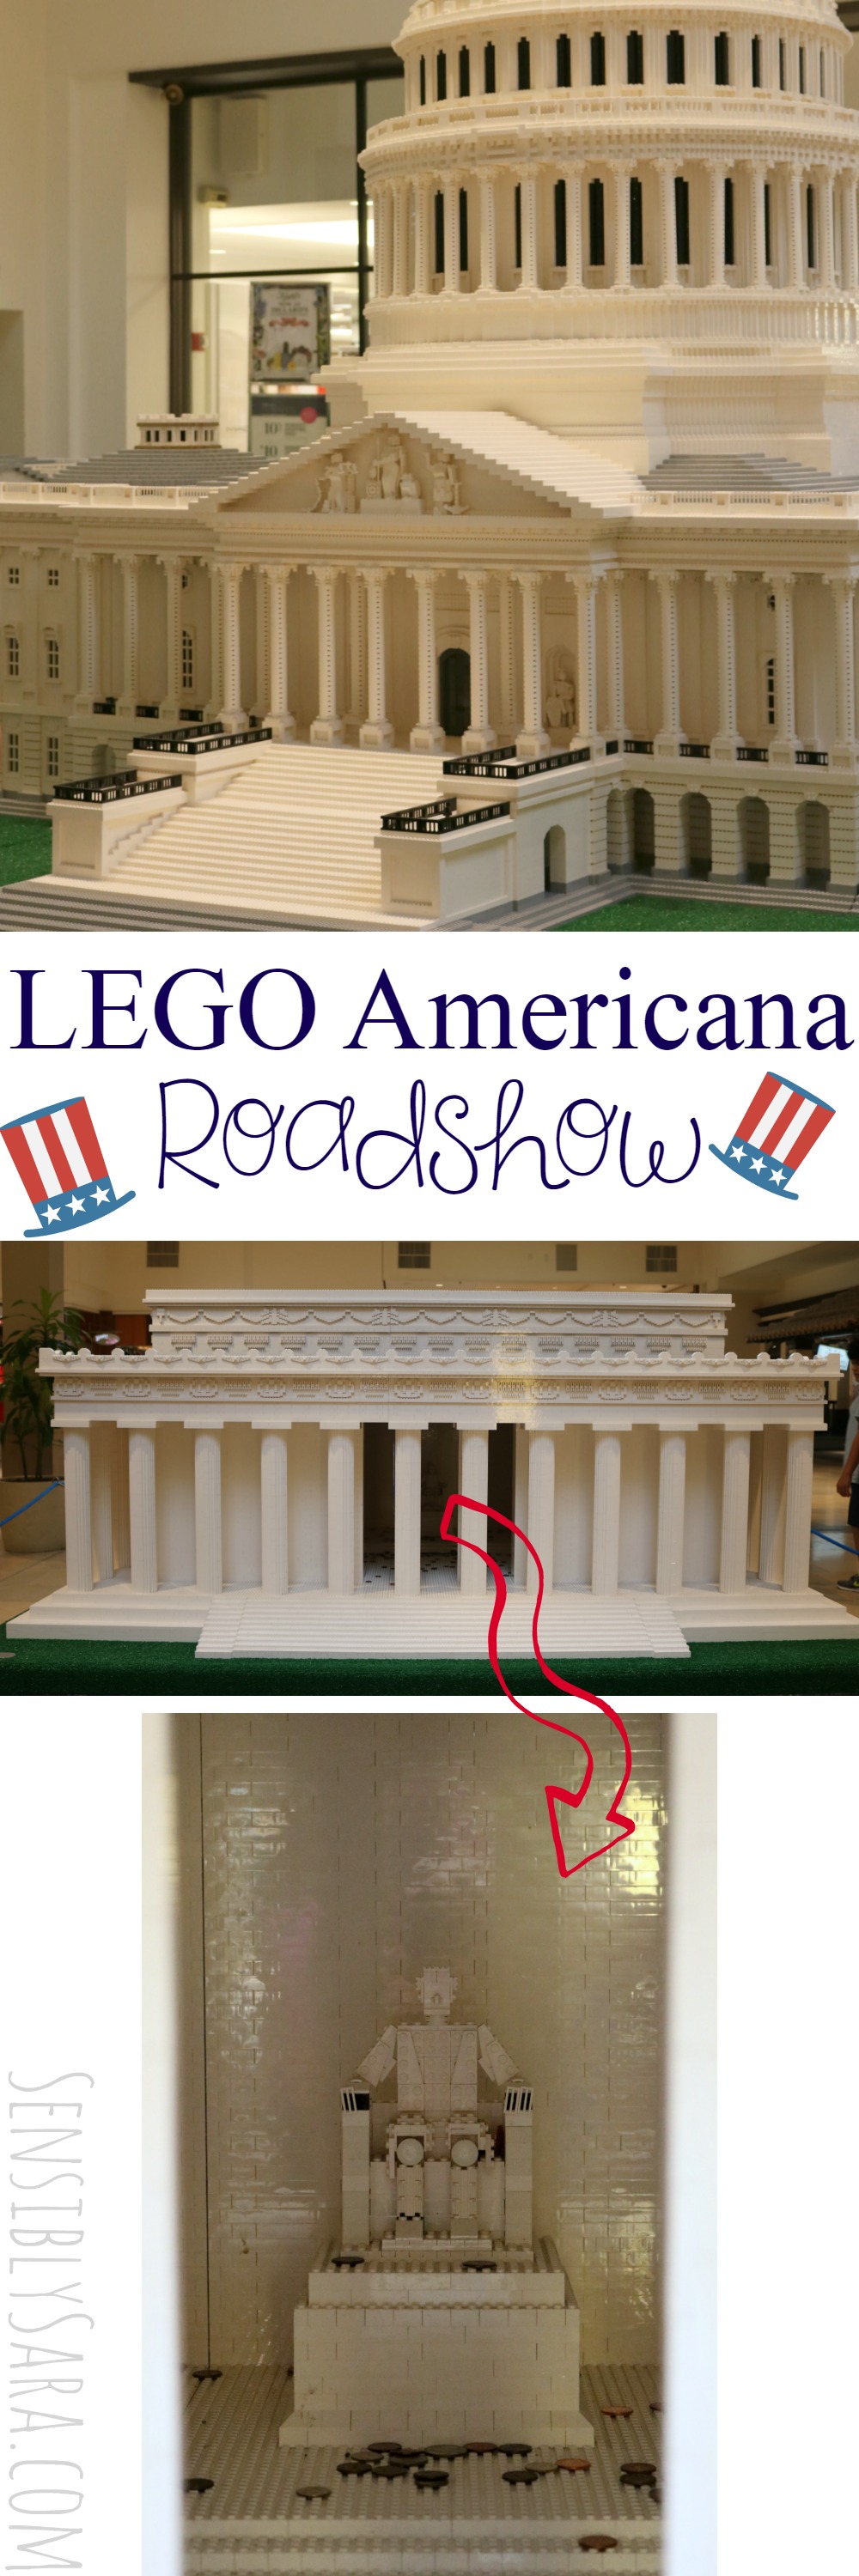 LEGO® Americana Roadshow in San Antonio at North Star Mall